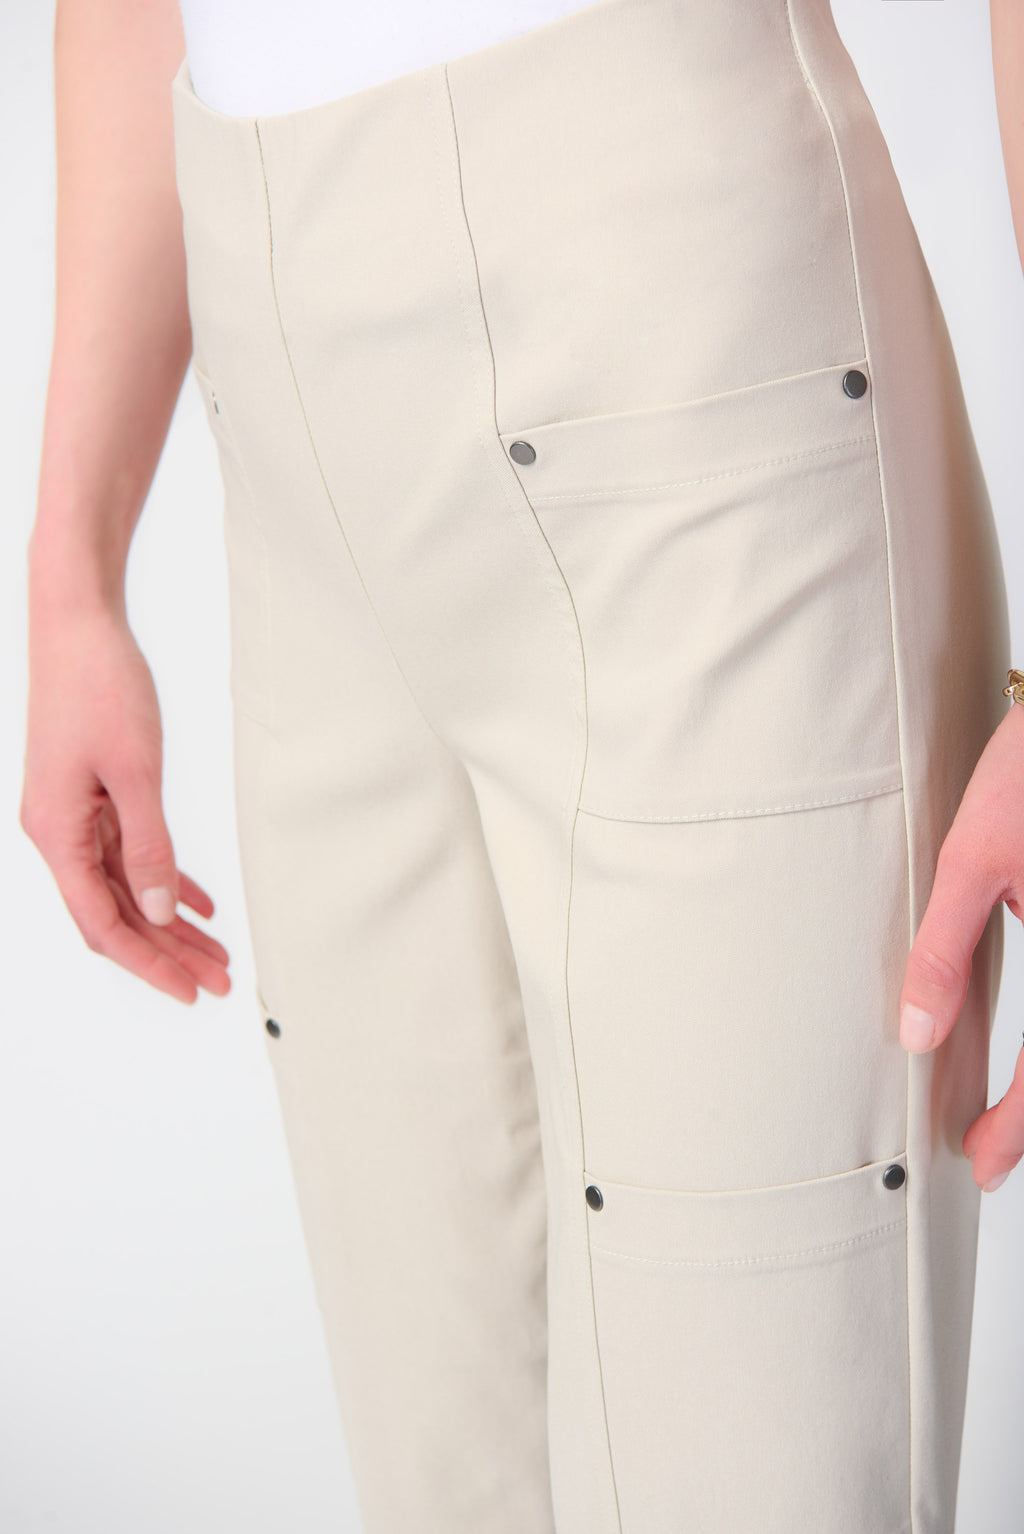 Joseph Ribkoff Moonstone Crop Pull-on Pants Style 241163